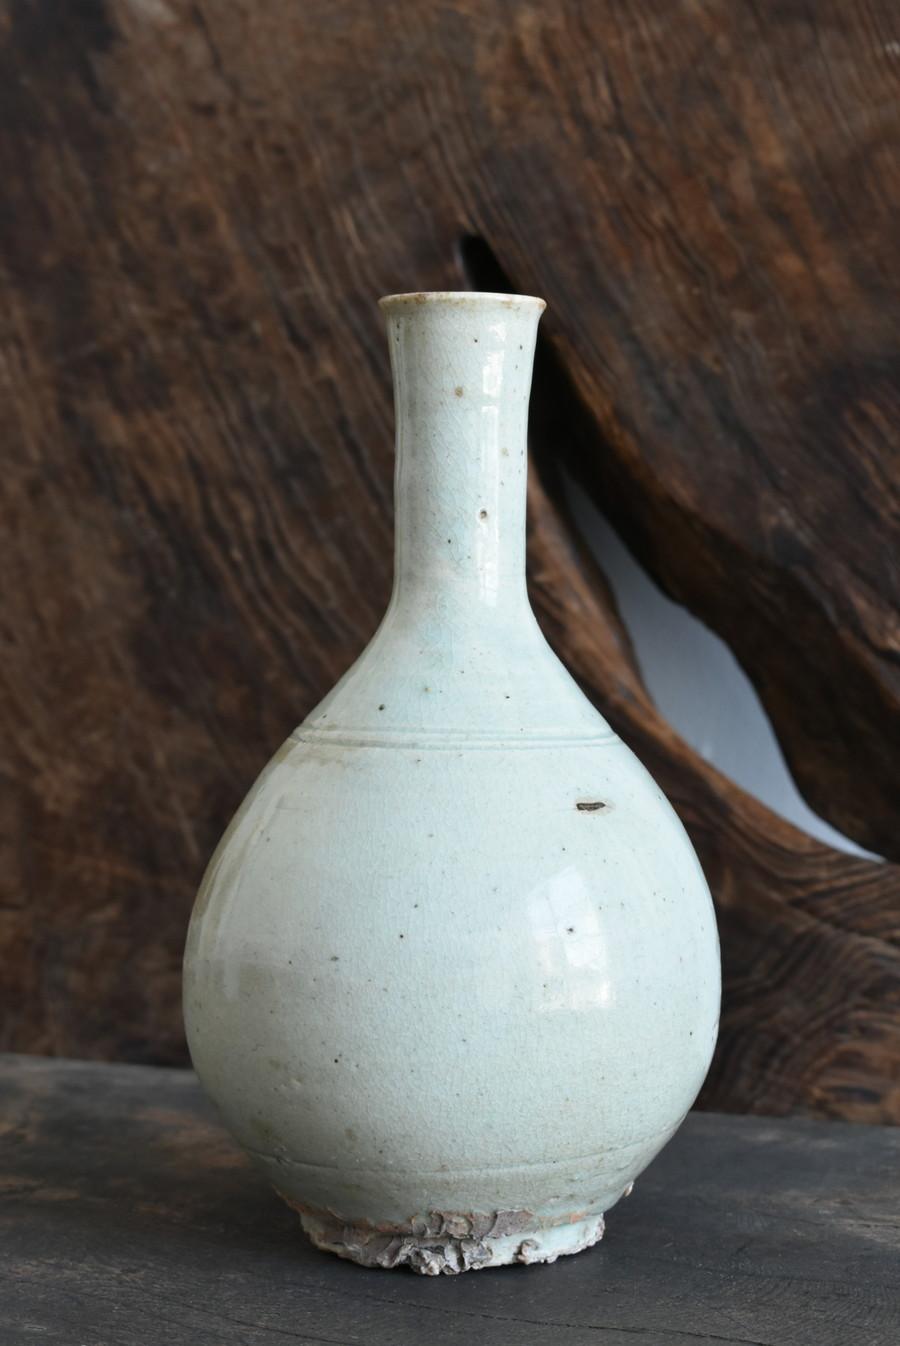 18th Century Korean Antique White Porcelain Vase /Vase with a Sense of Transparency/1750-1850 For Sale